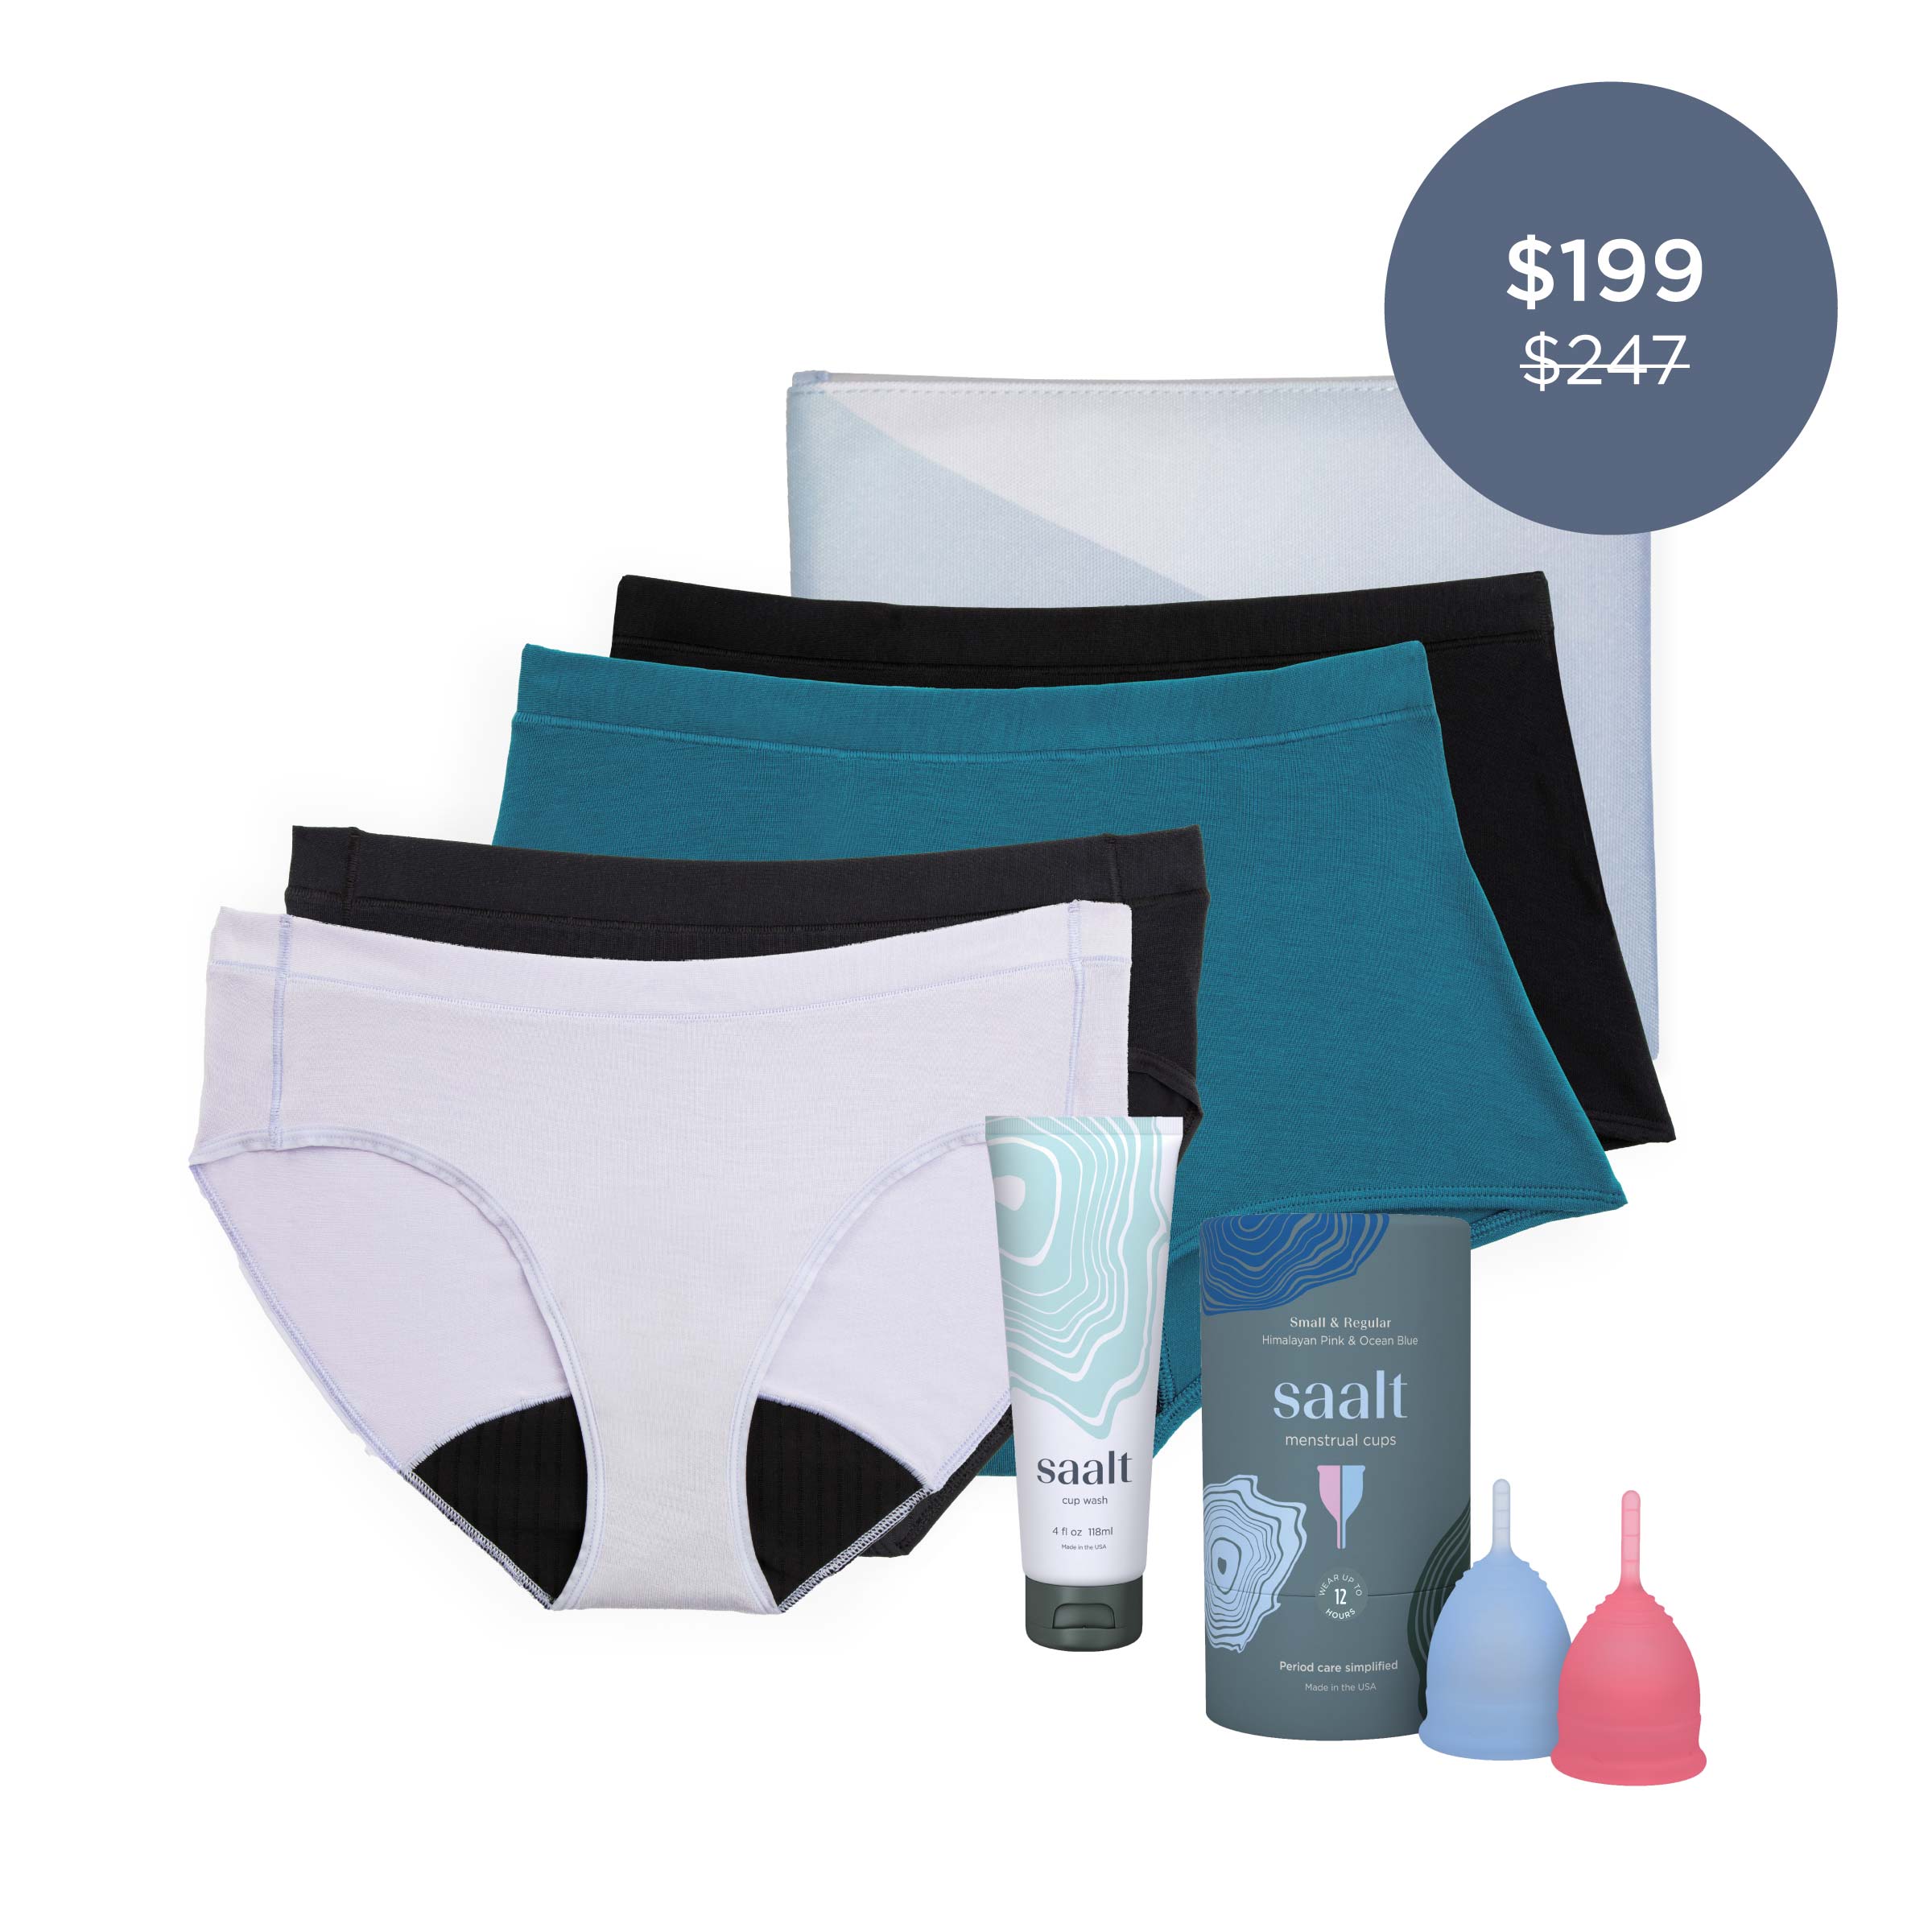 Flowette Period Pants, Floweret Menstrual Cups & Period Kits